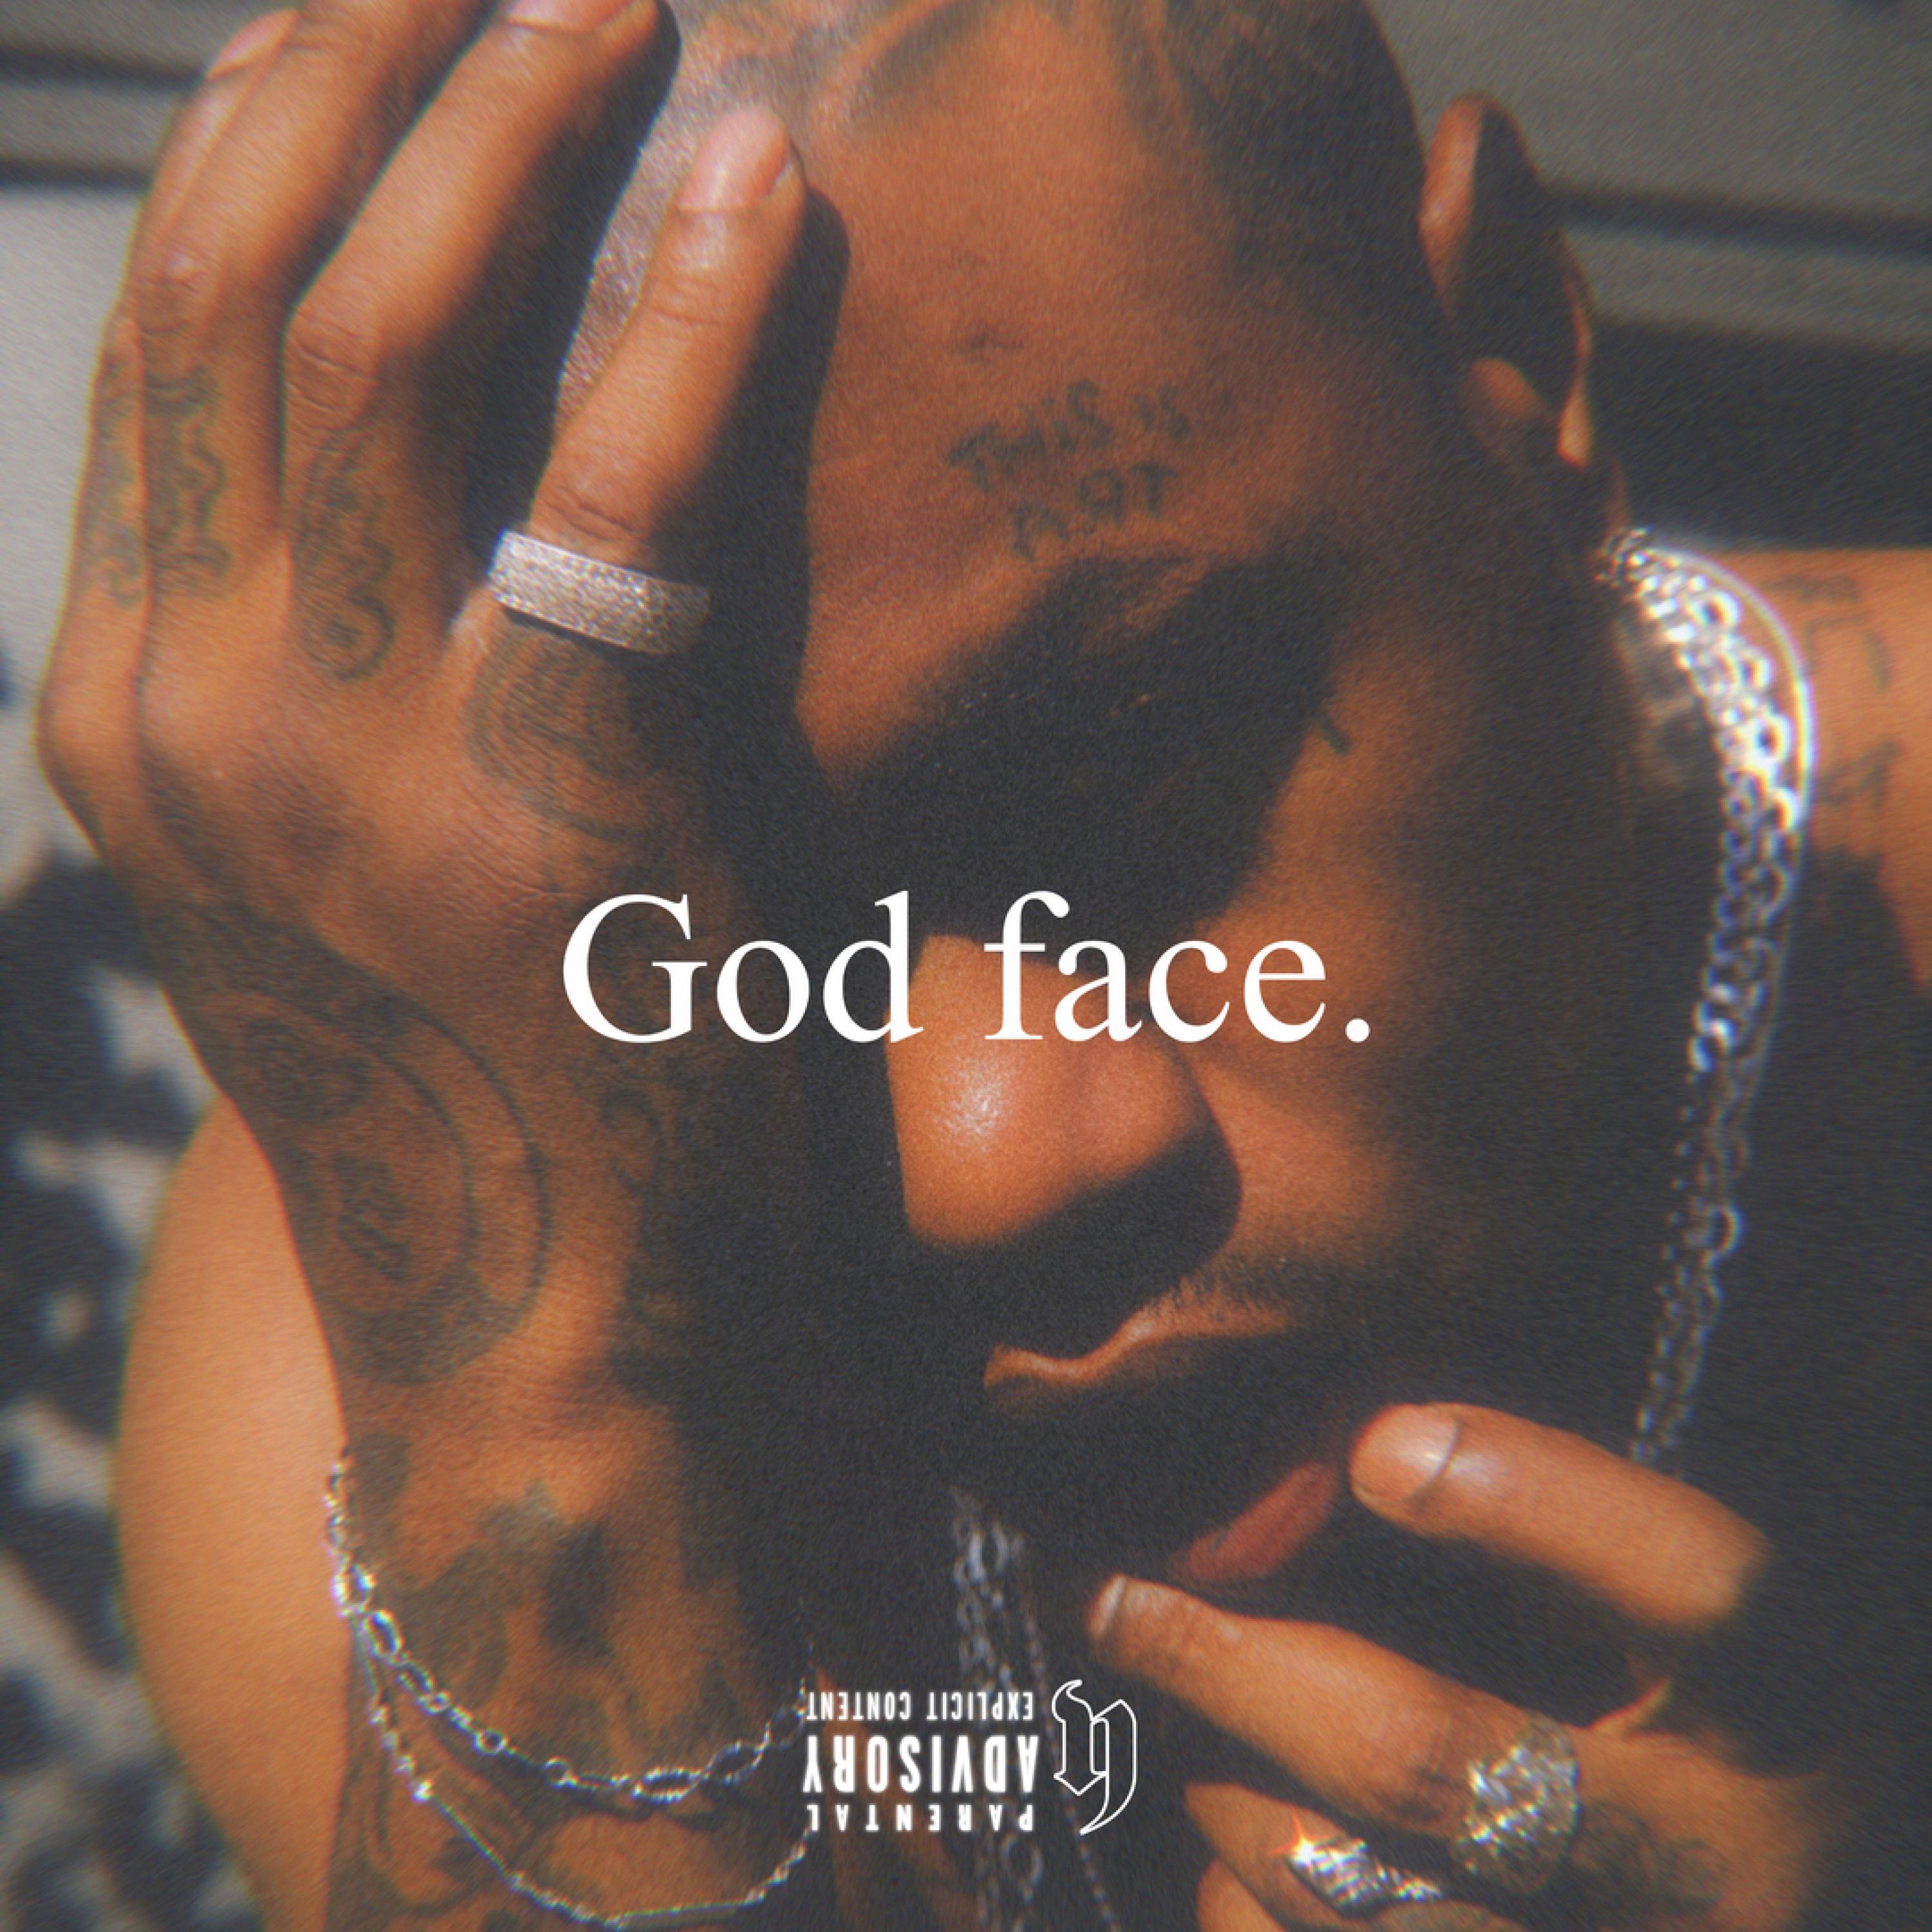 Ysl歌词 歌手Y2-专辑God face.-单曲《Ysl》LRC歌词下载